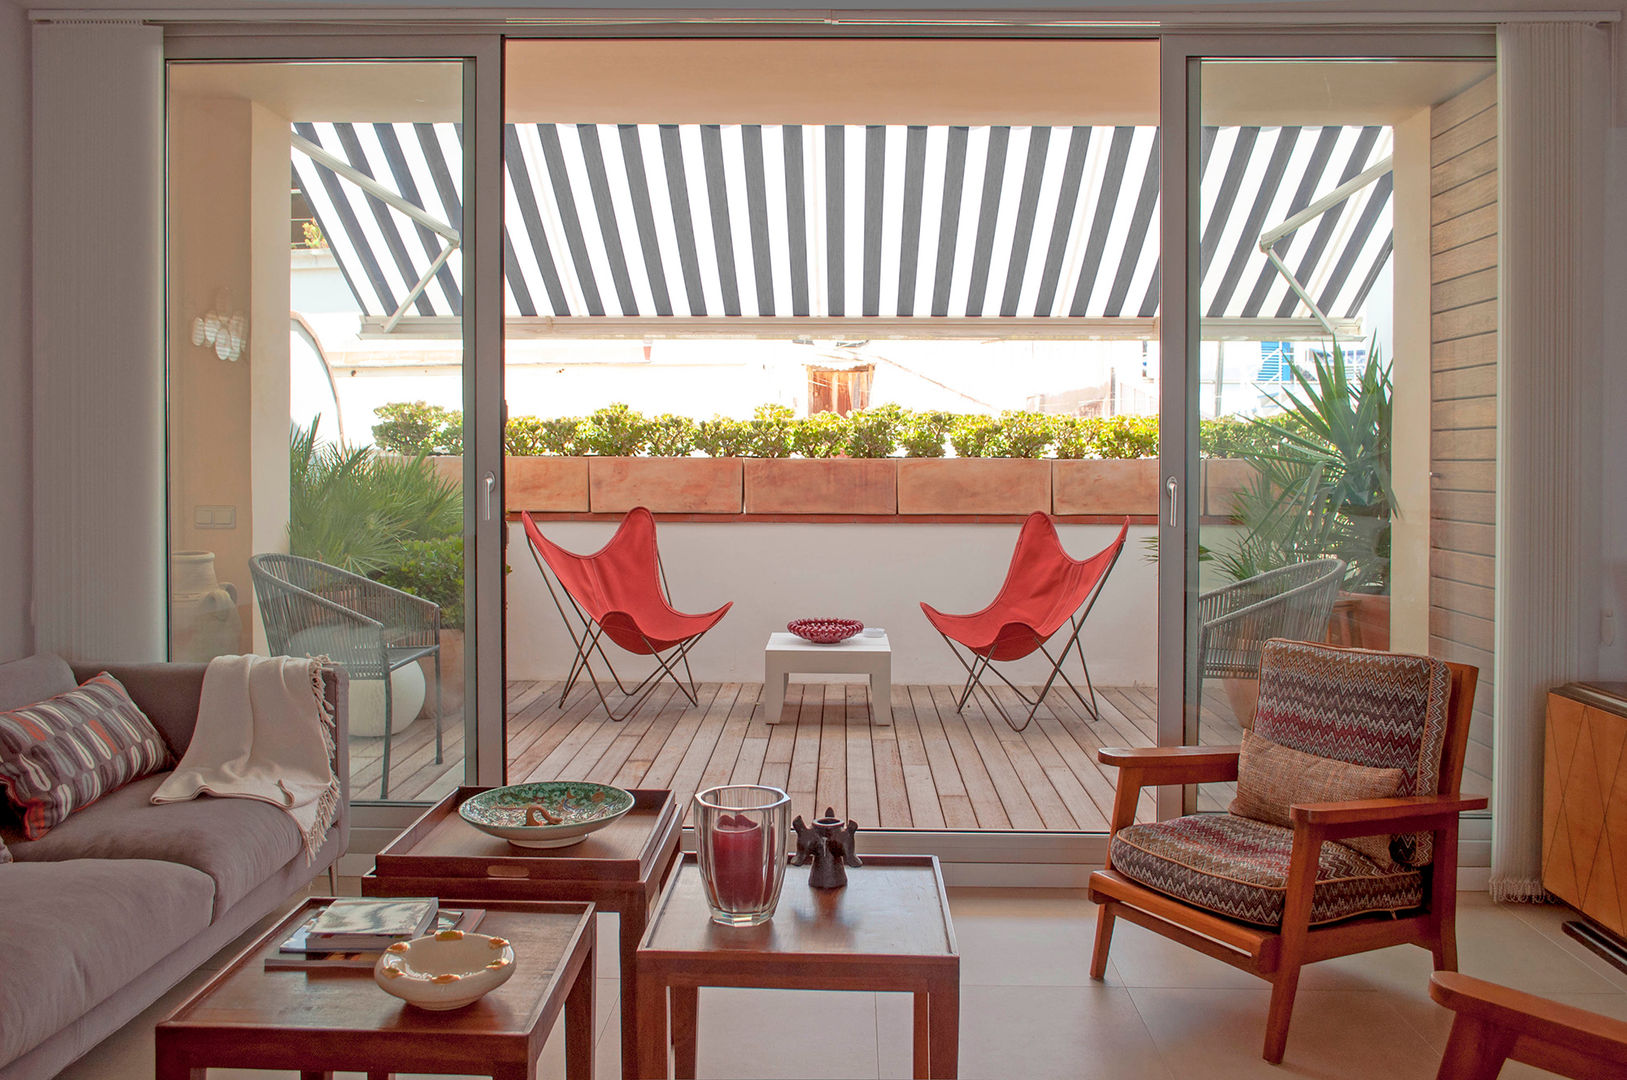 El salón homify Livings de estilo moderno architects in sitges,arquitectos,sitges,terrace,living room